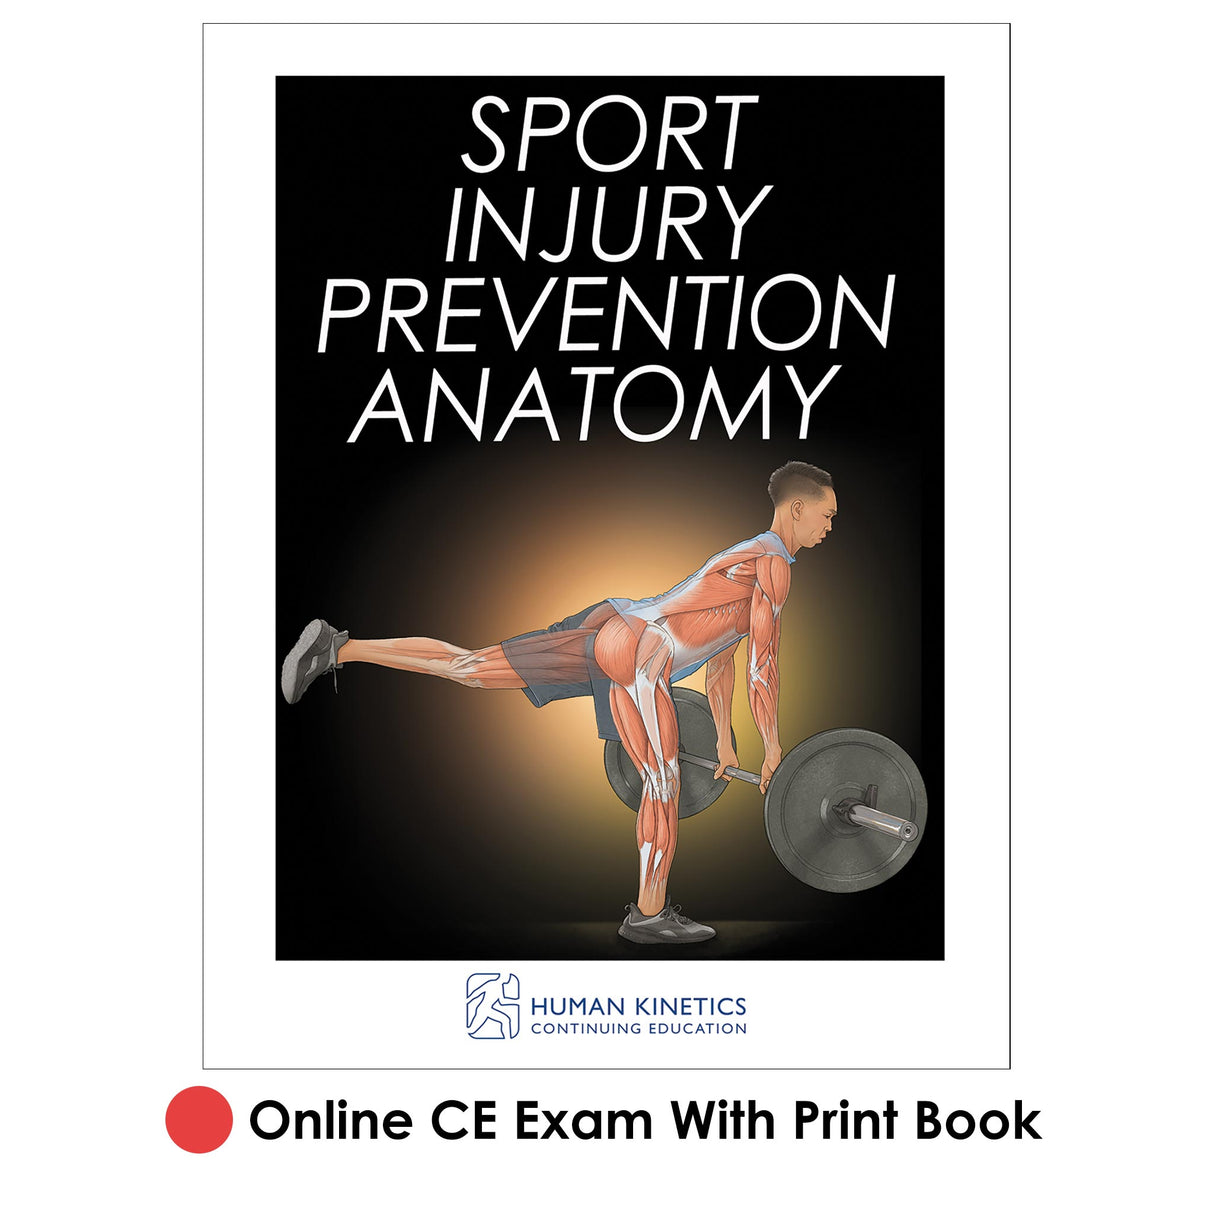 Sport Injury Prevention Anatomy Online CE Exam With Print Book